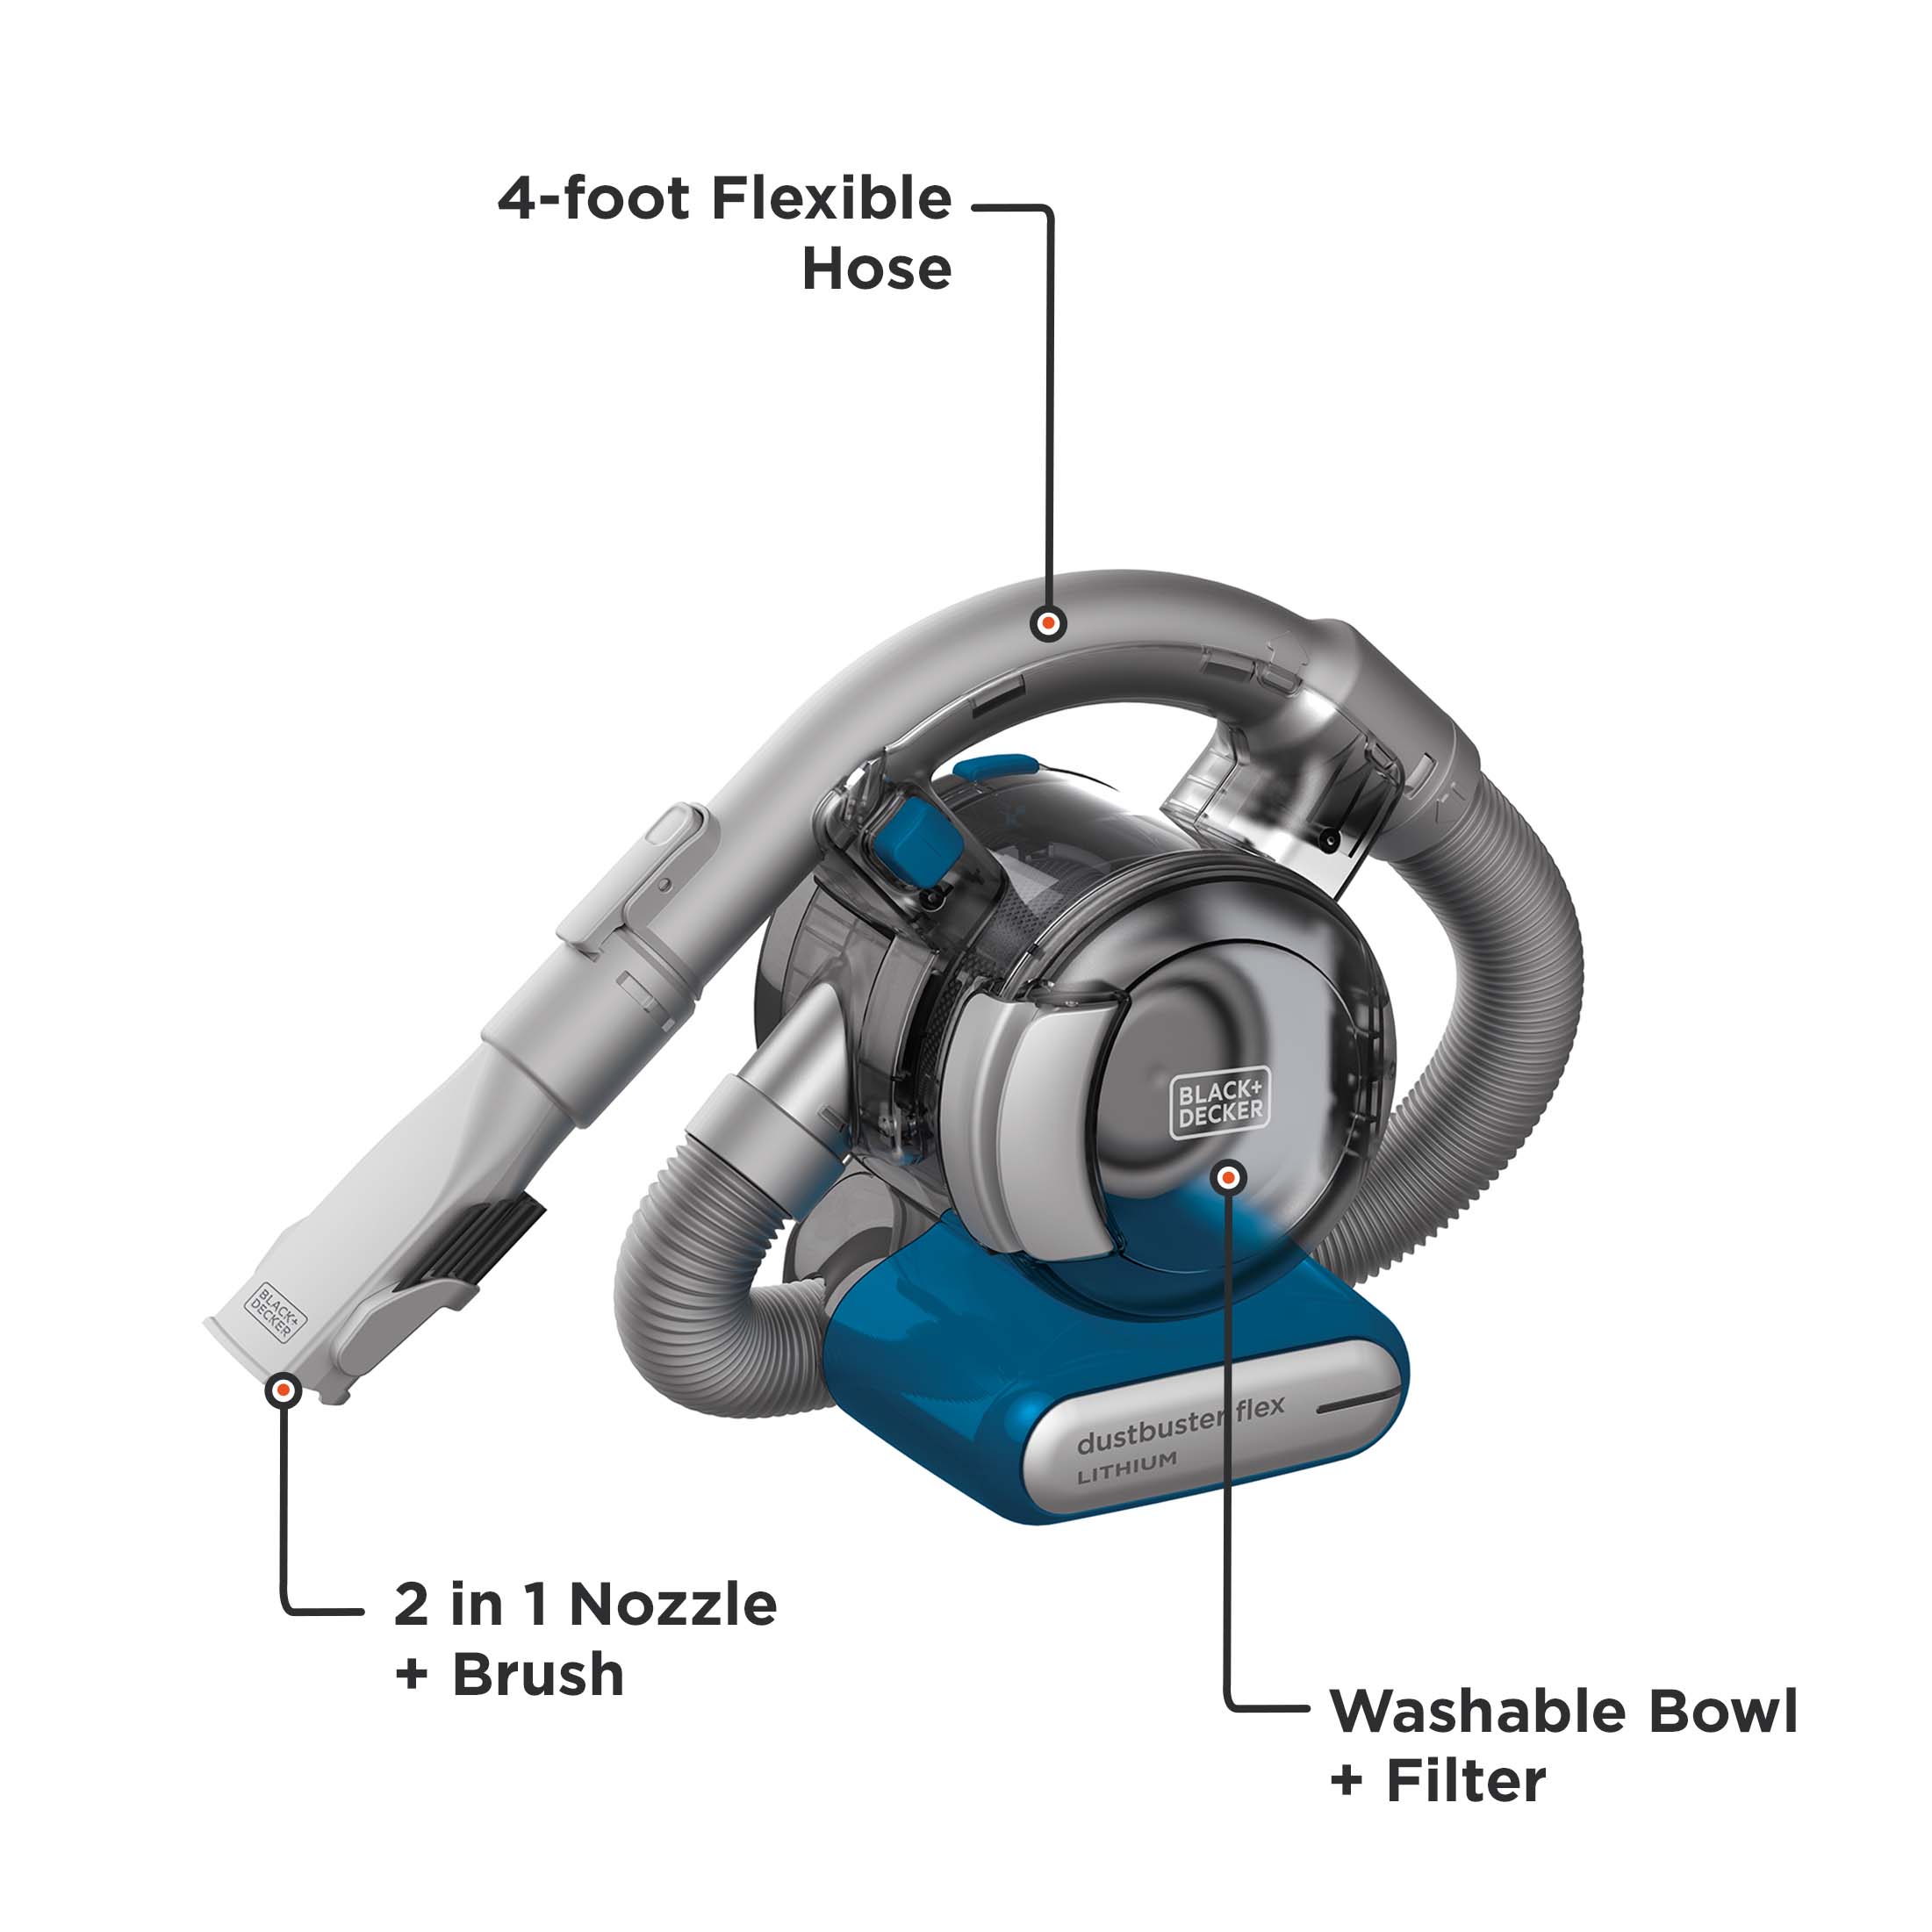 Black And Decker Dustbuster Flex Cordless Handheld Vacuum - image 2 of 8